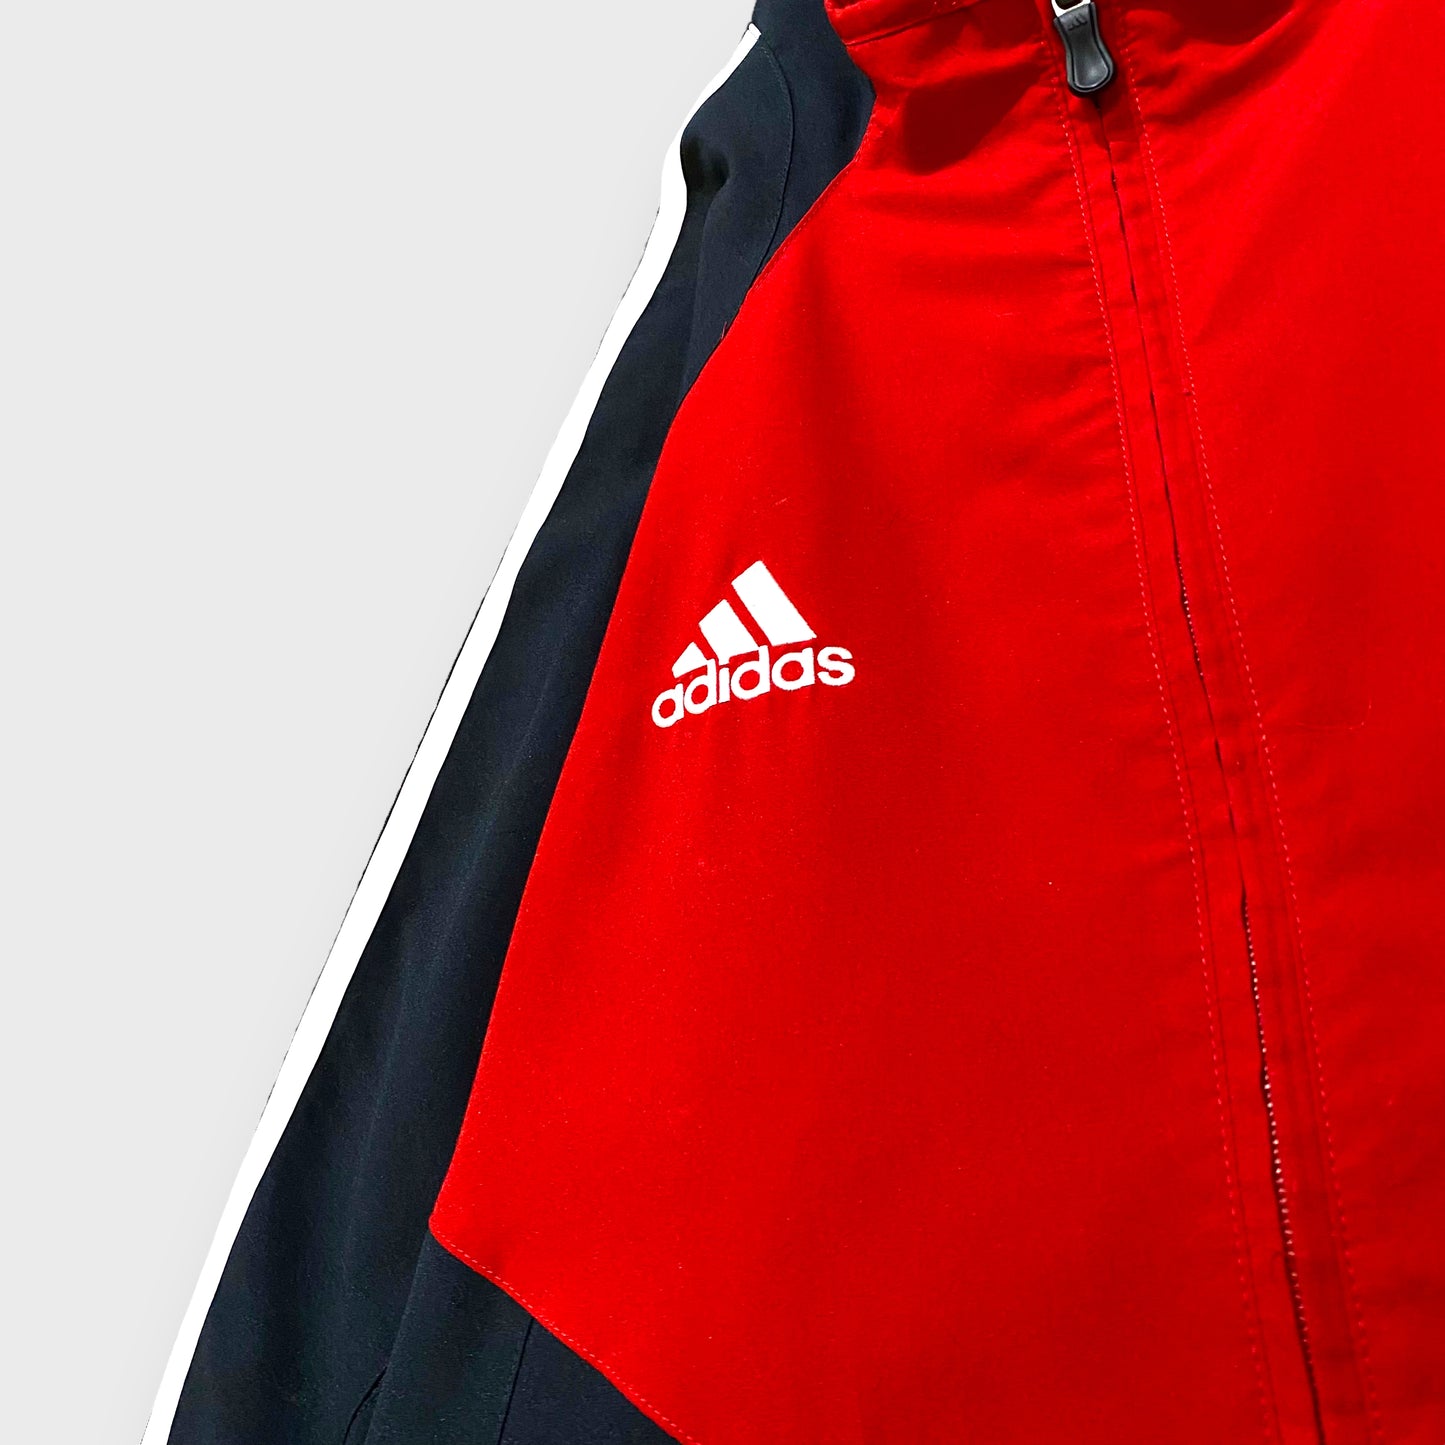 00's "adidas" Bi-color nylon jacket